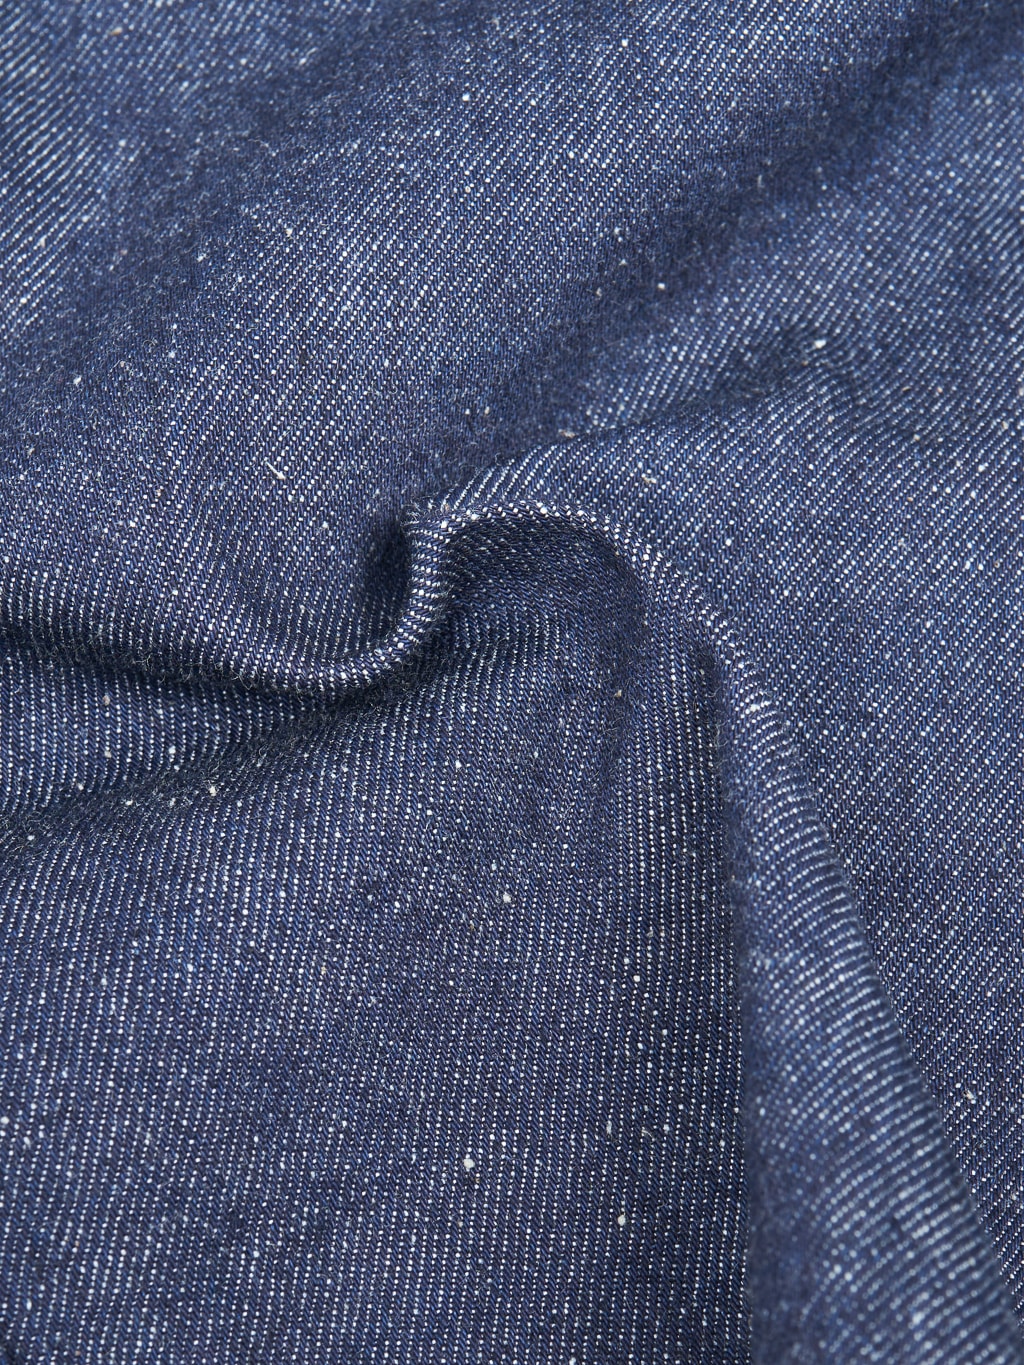 Samurai jeans denim work shirt cotton fabric